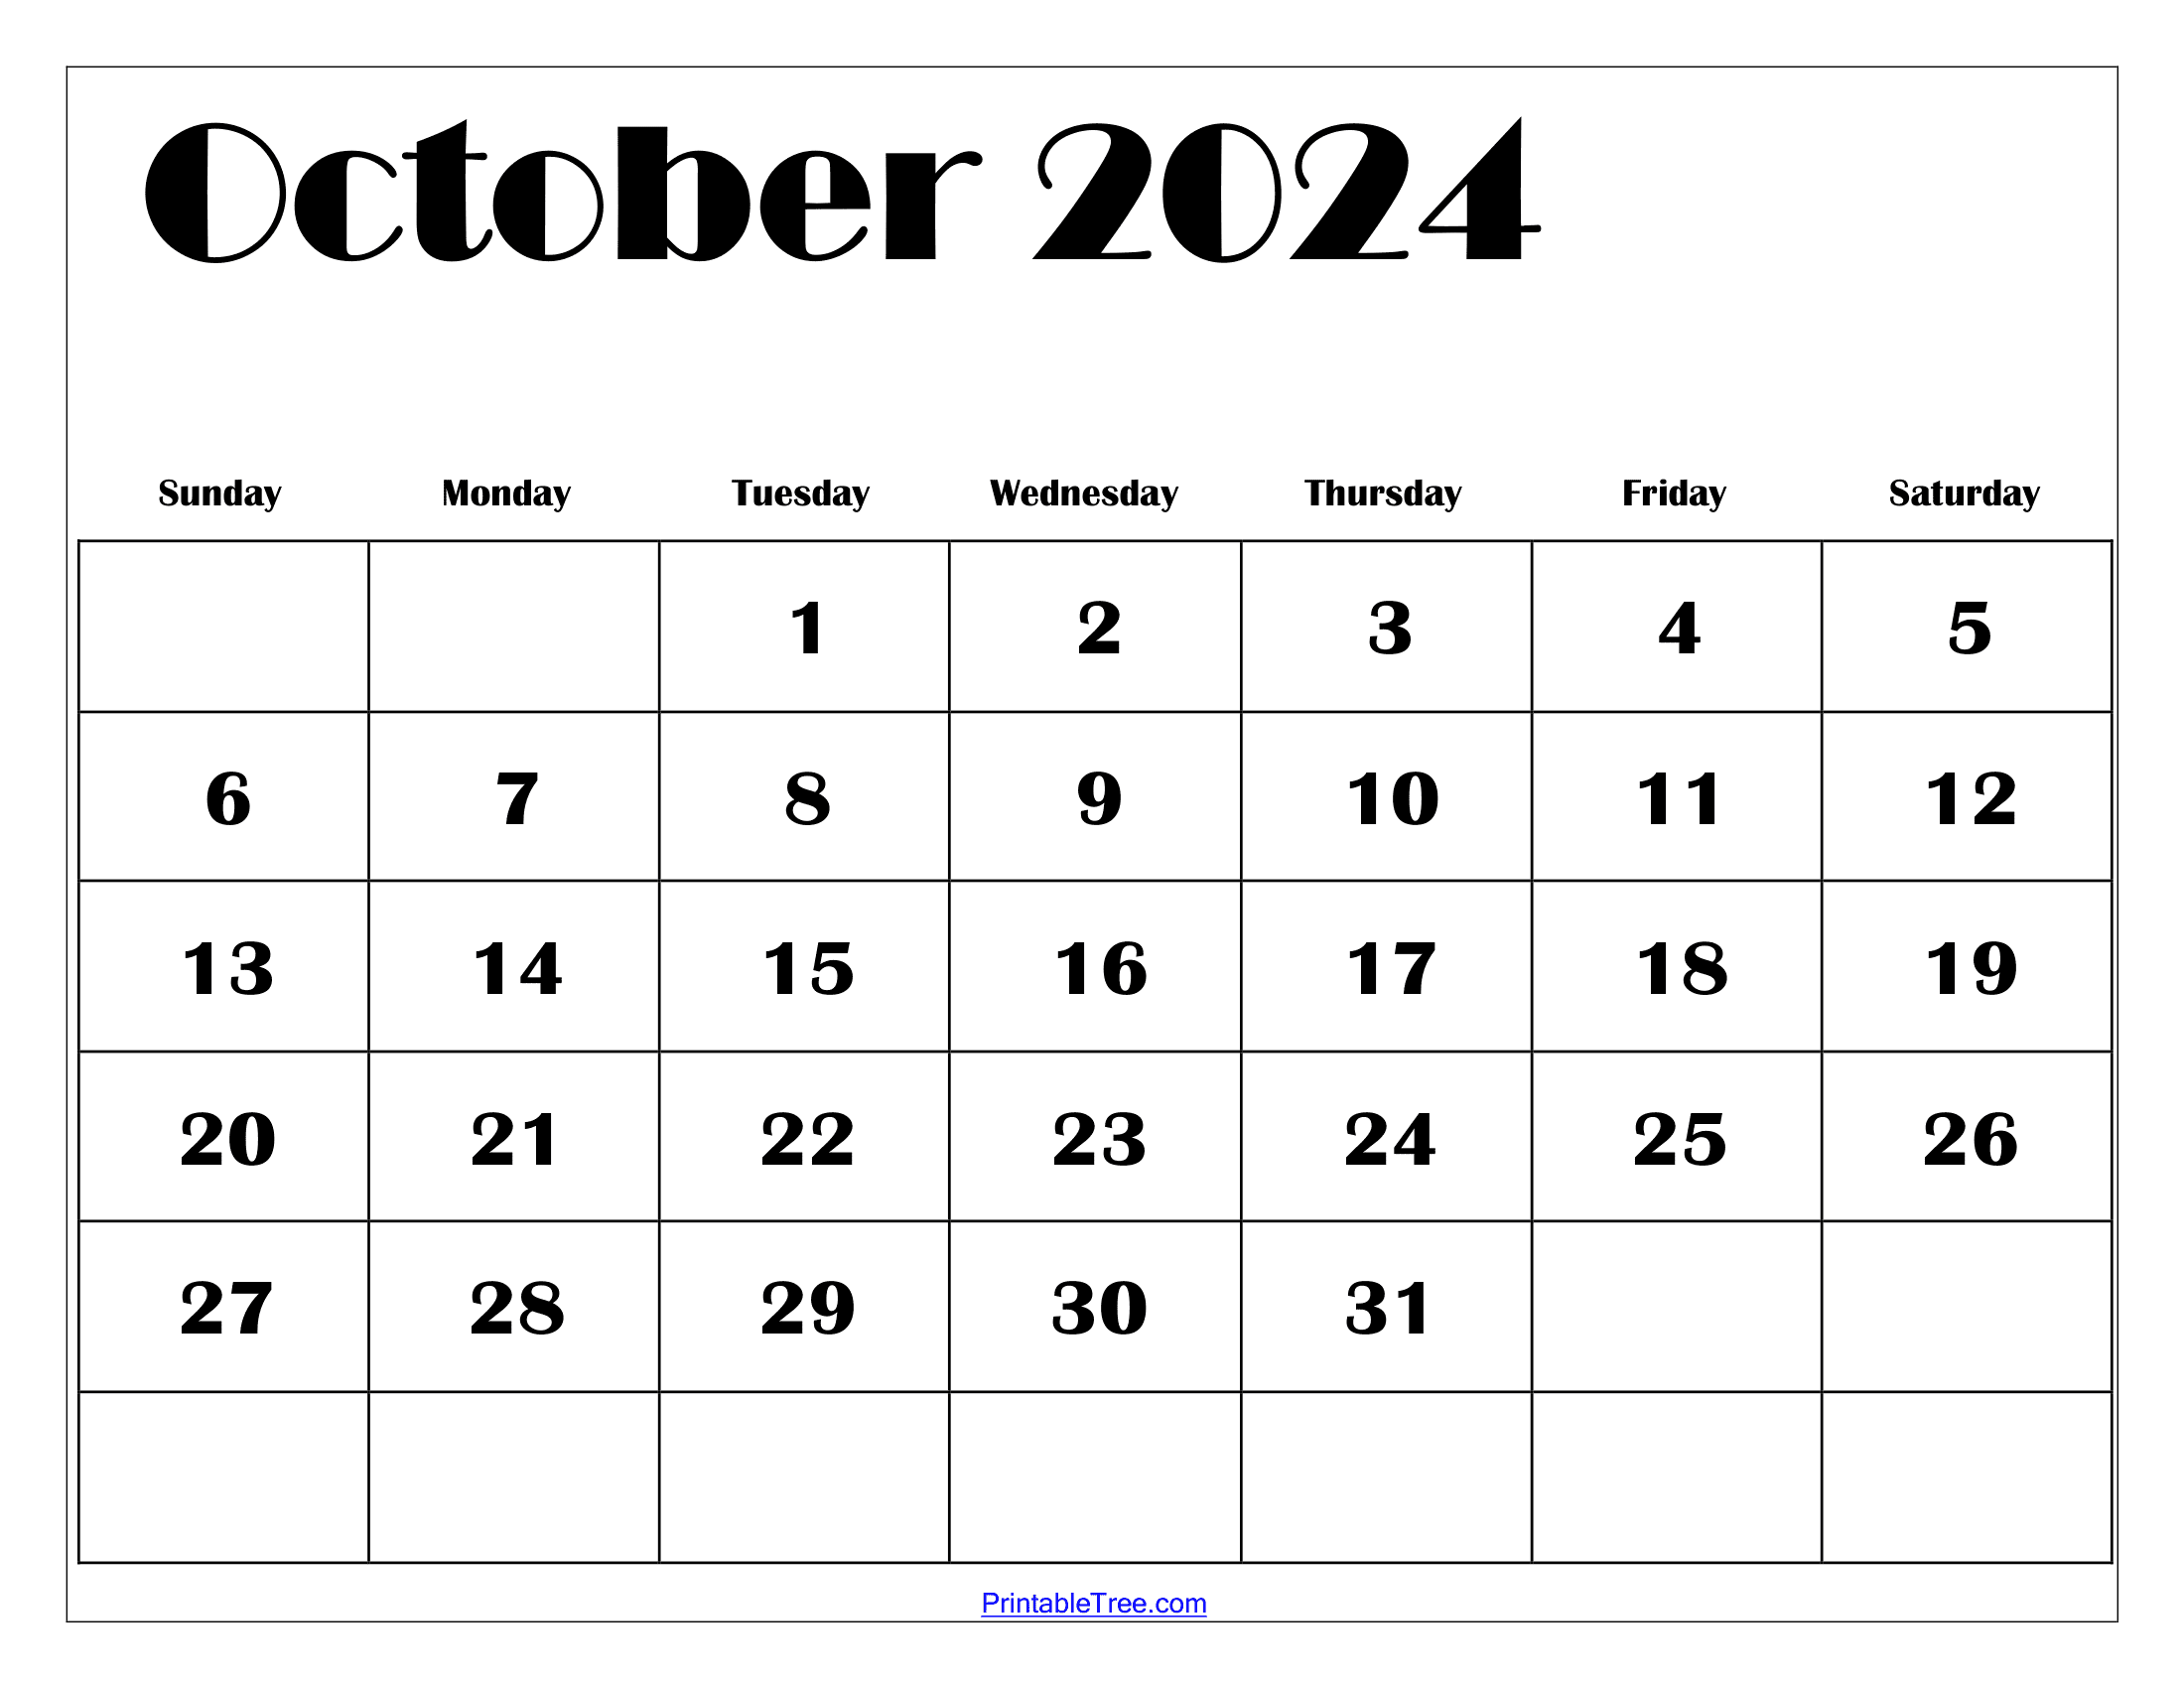 October 2024 Calendar Printable Pdf Free Templates With Holidays for 2024 October Calendar Printable